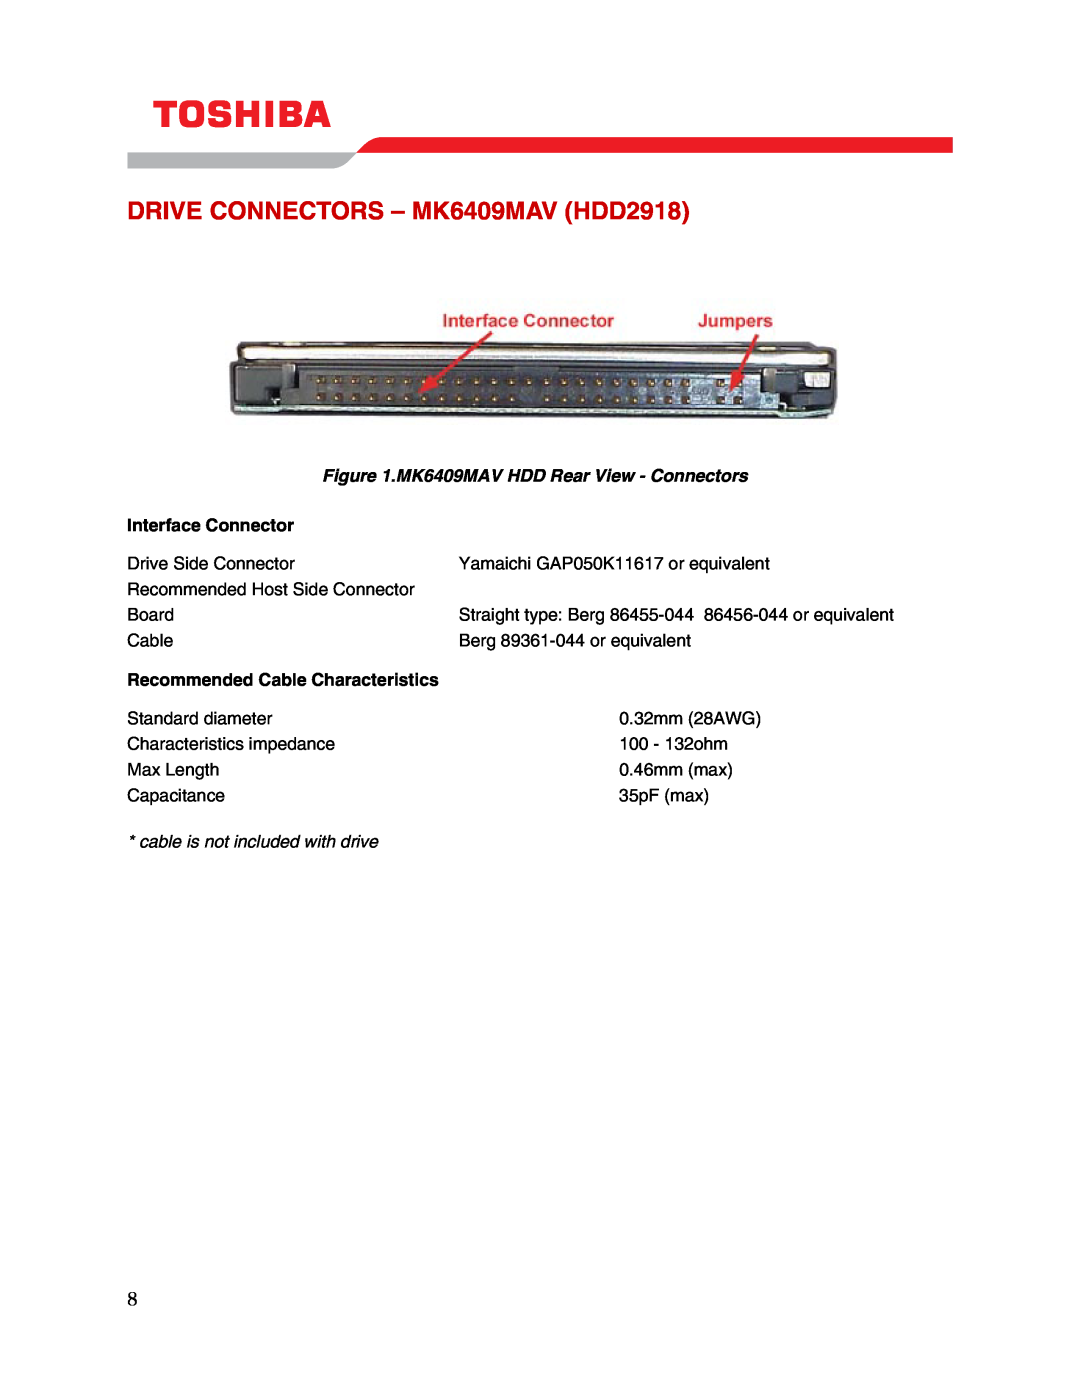 Toshiba user manual DRIVE CONNECTORS - MK6409MAV HDD2918, MK6409MAV HDD Rear View - Connectors, Interface Connector 